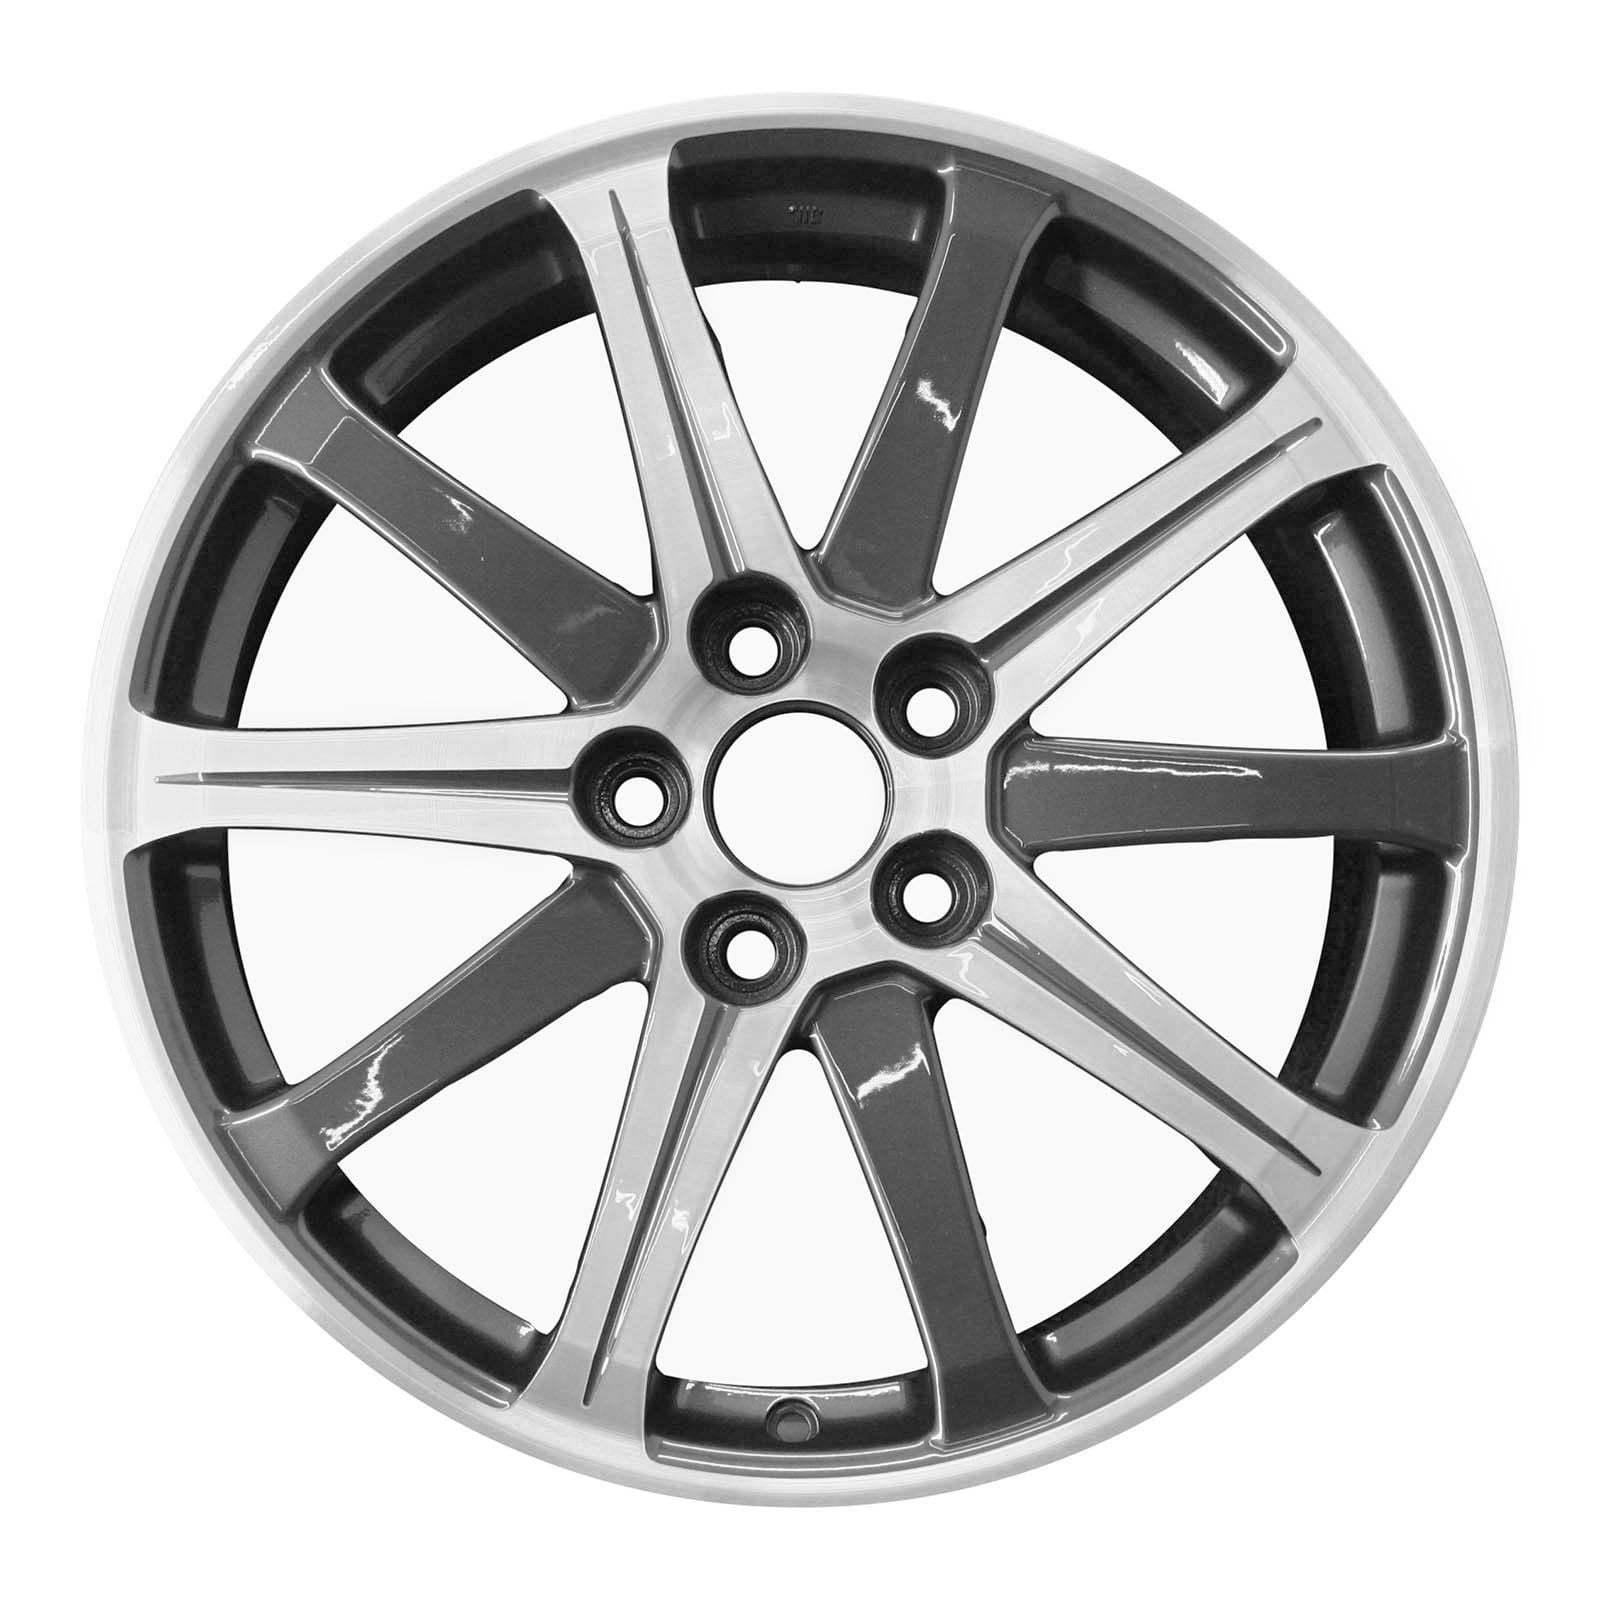 Wheels and Tires/Axles - WTB: 4x 19 Inch Diamond Cut Alloy Wheels 08W19-TK4-201B 5X120 - Used - 2009 to 2014 Acura TL - St Paul, MN 55113, United States